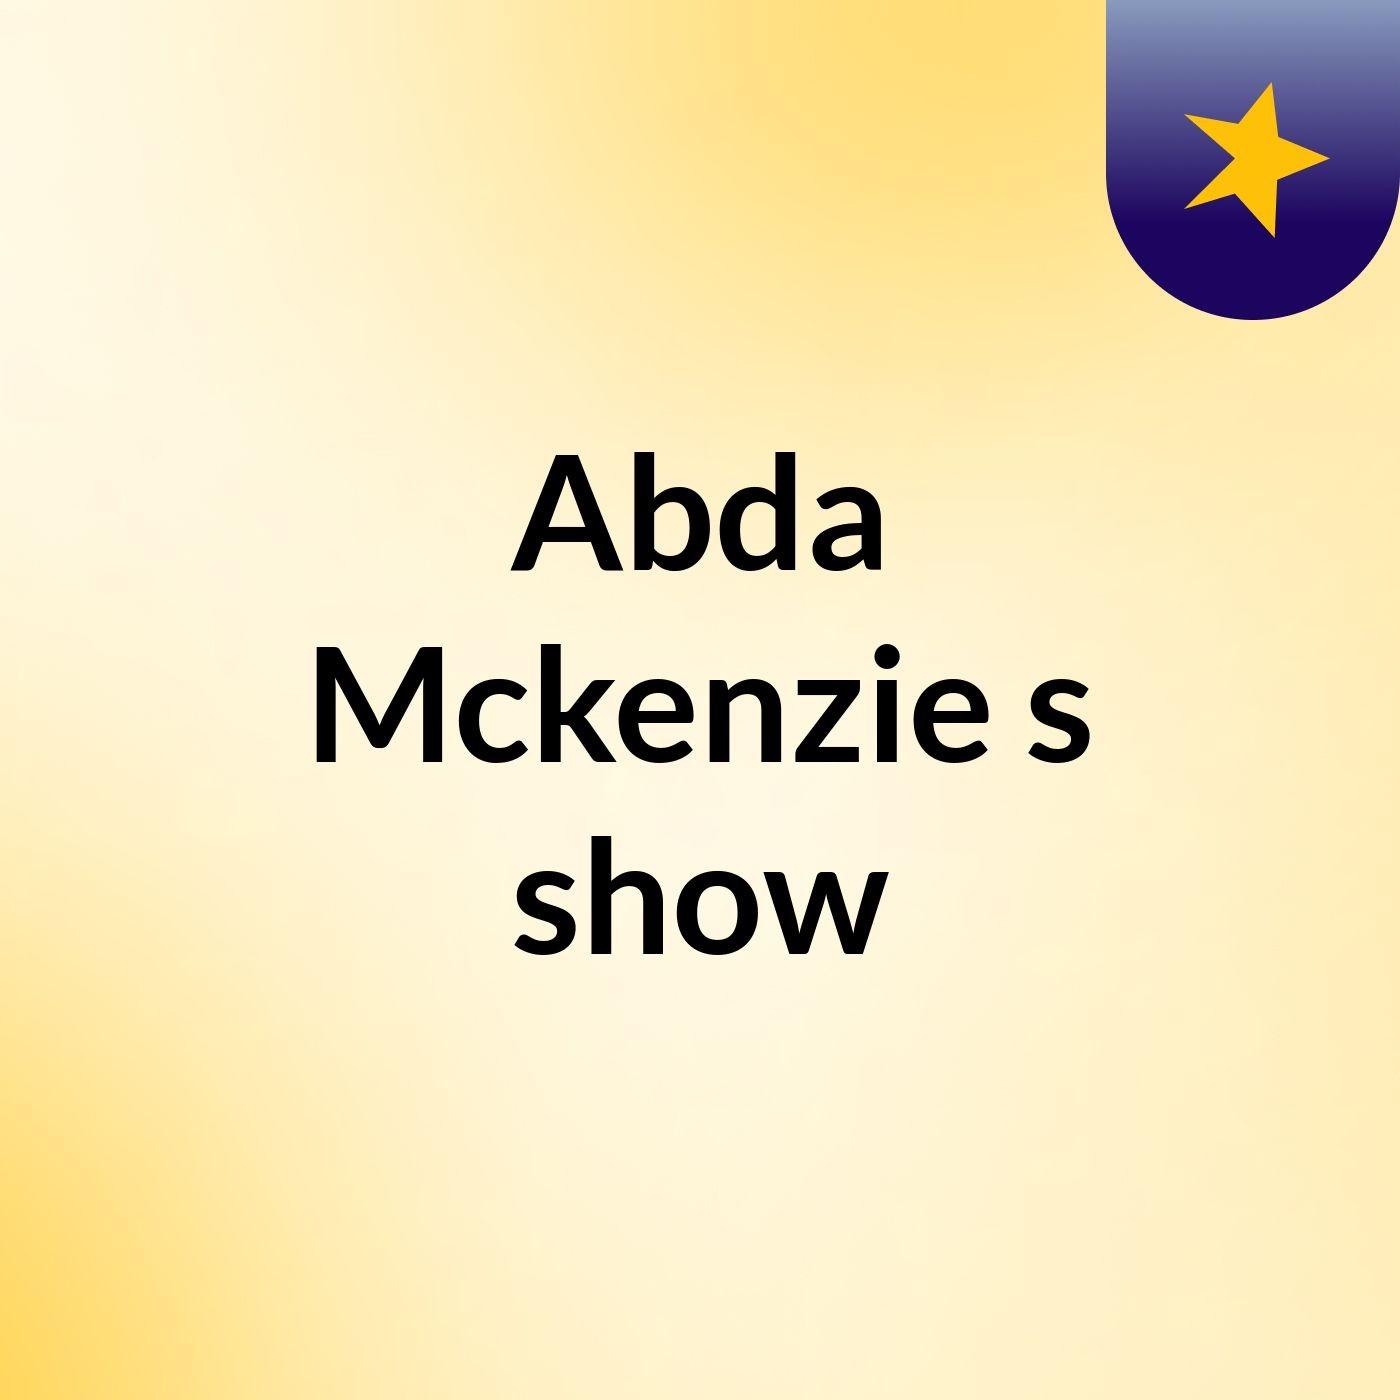 Abda Mckenzie's show